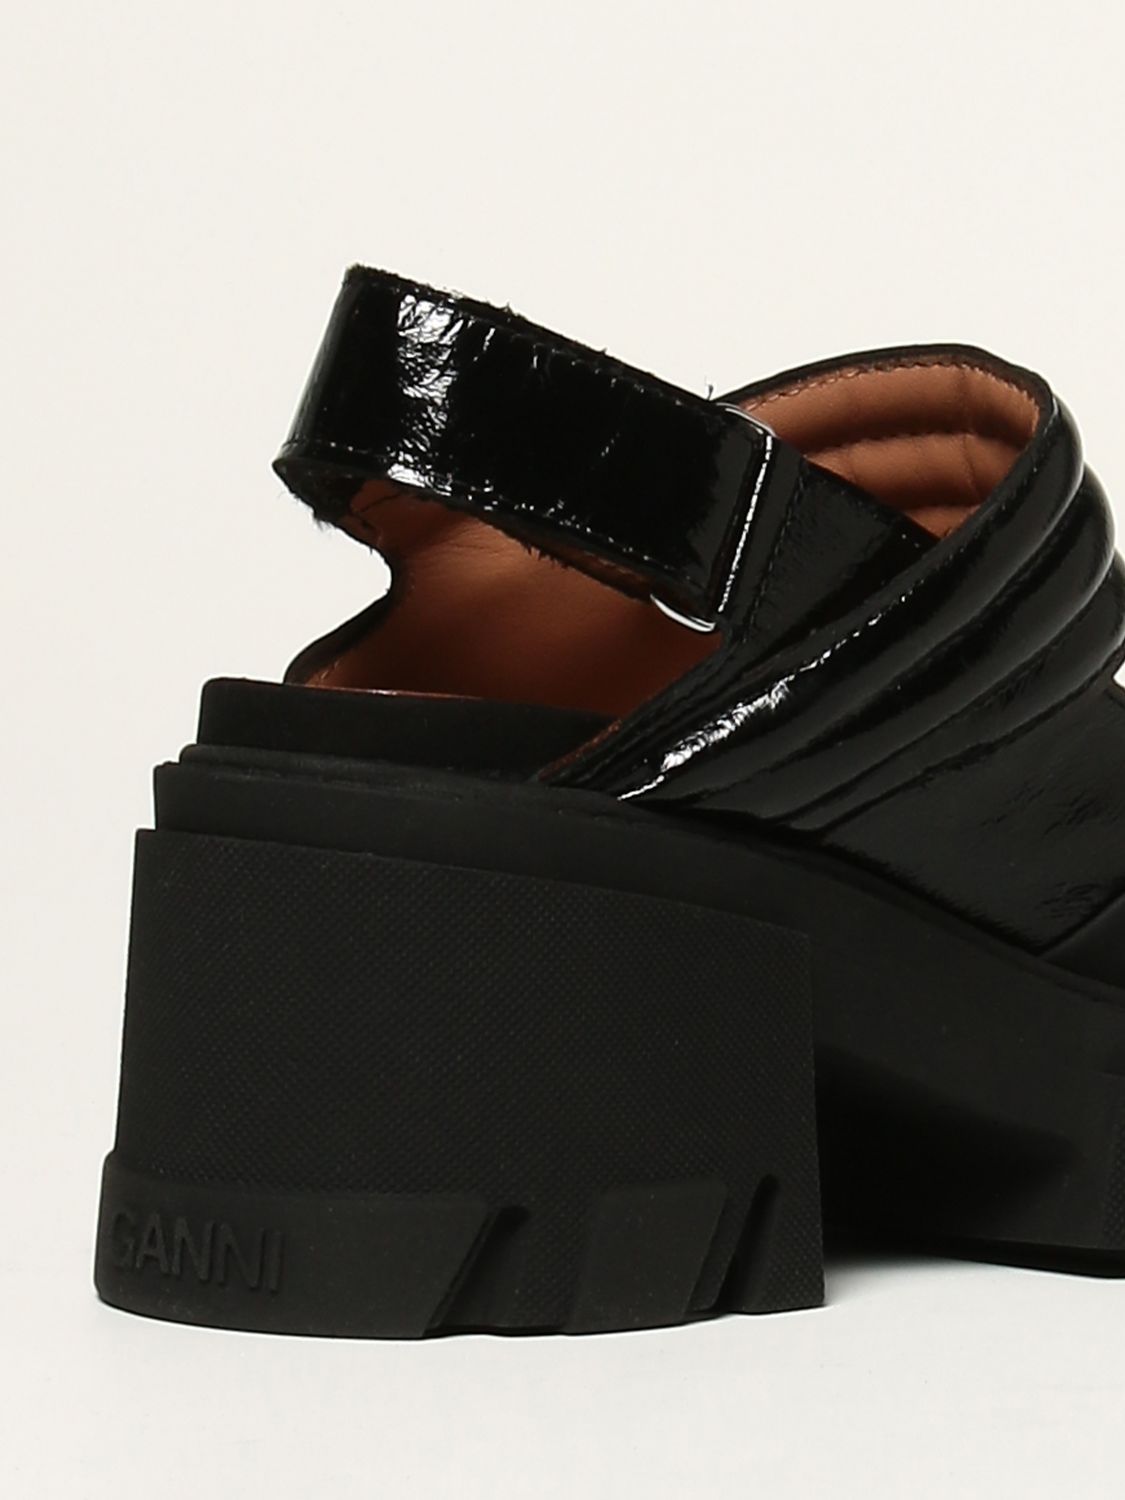 High heel shoes Ganni: Mary Jane Ganni naplak slingbacks black 3